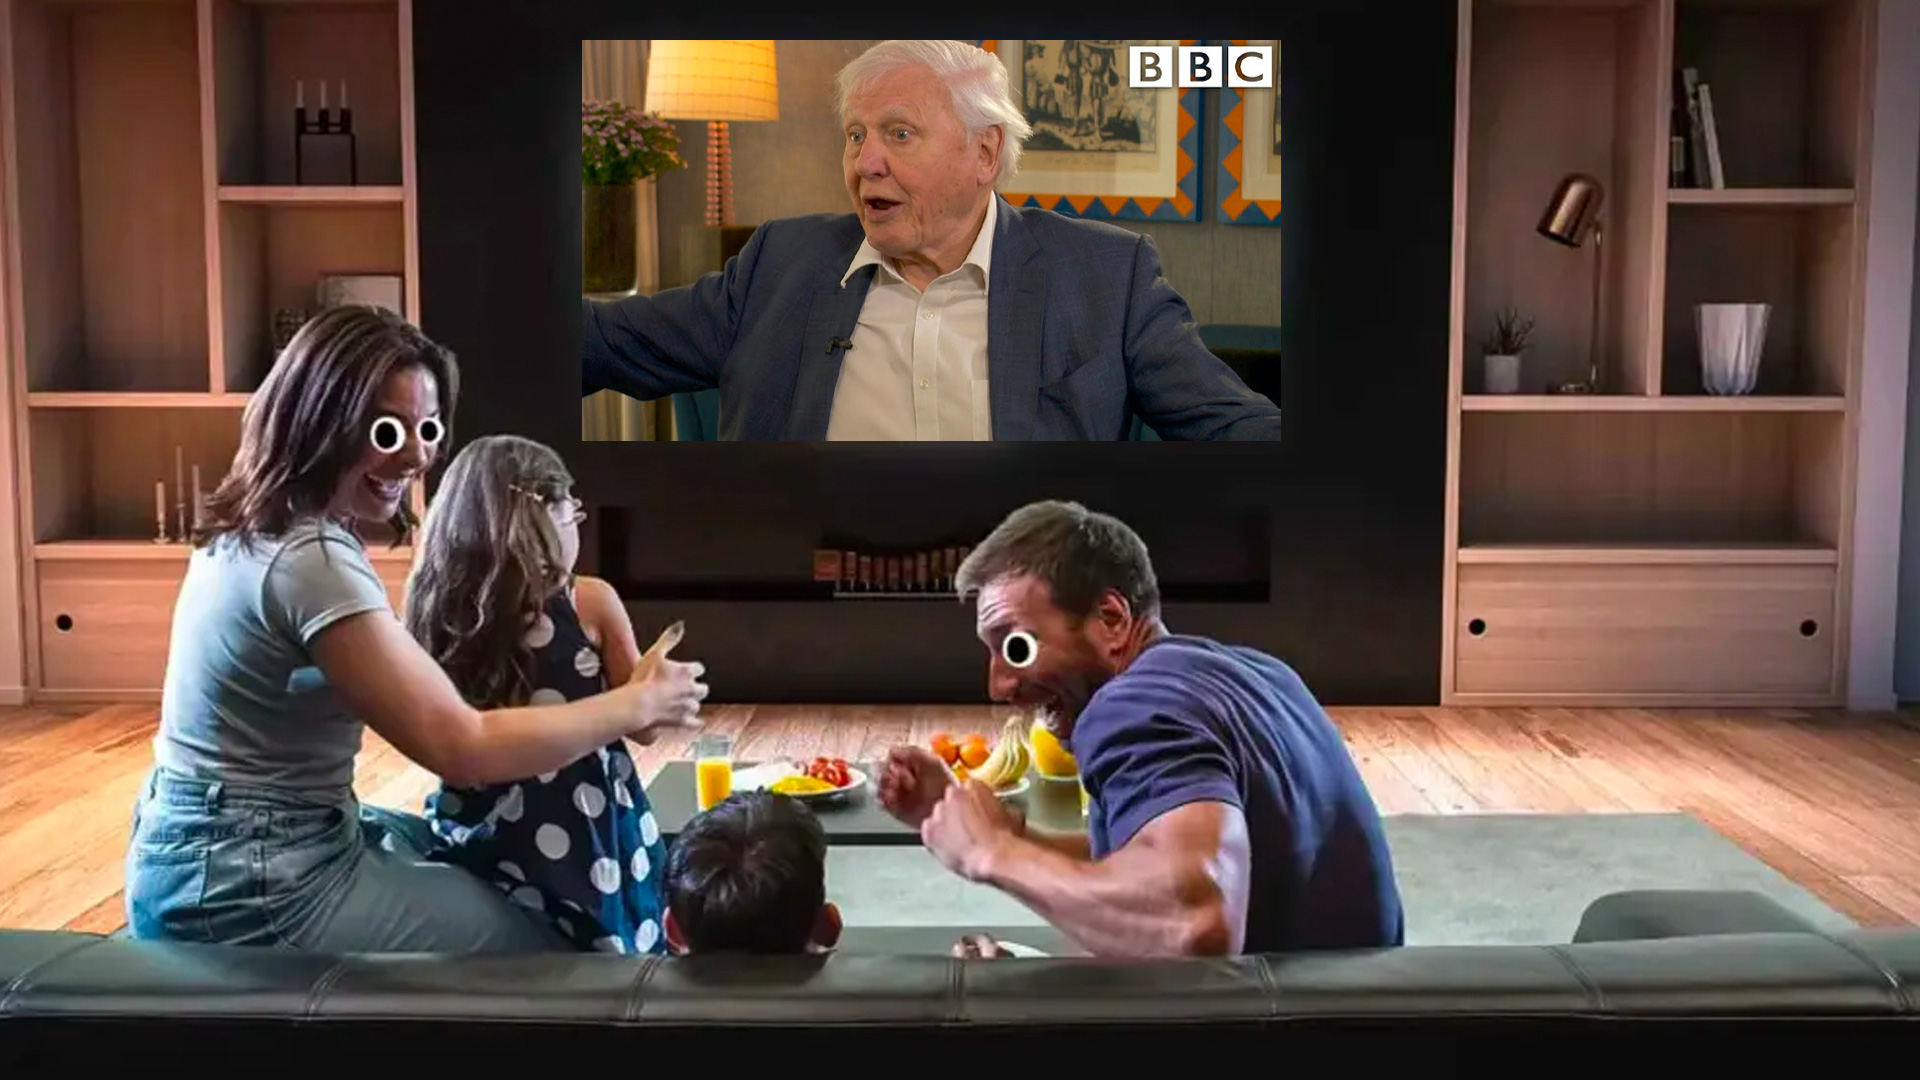 Sir David Attenborough on the BBC